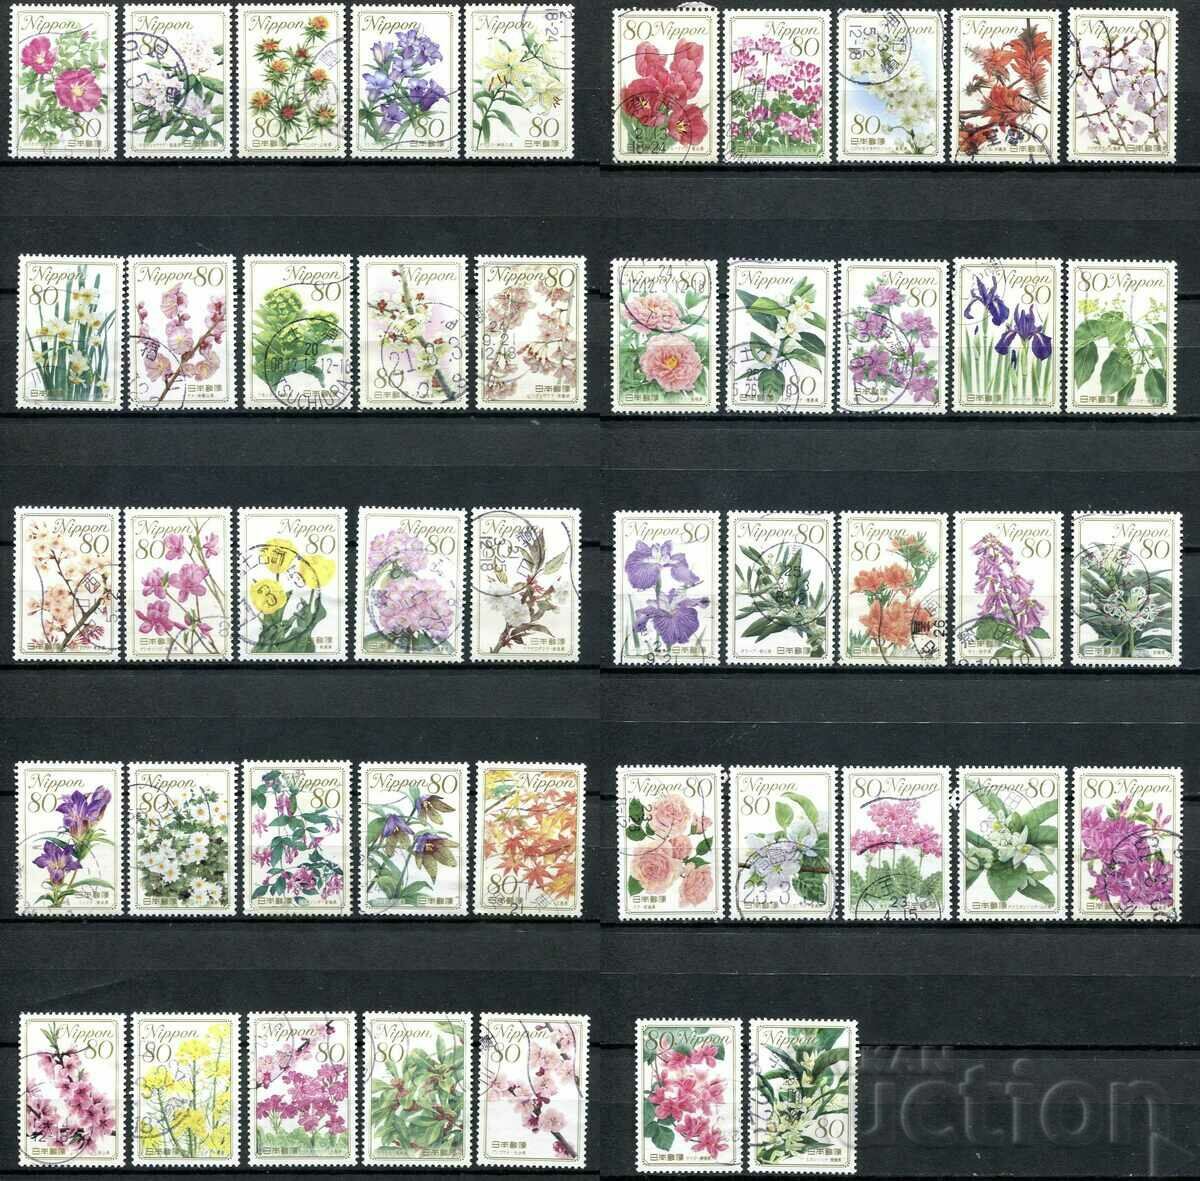 Japan 2008-11 USED - Flowers, flora [full series]